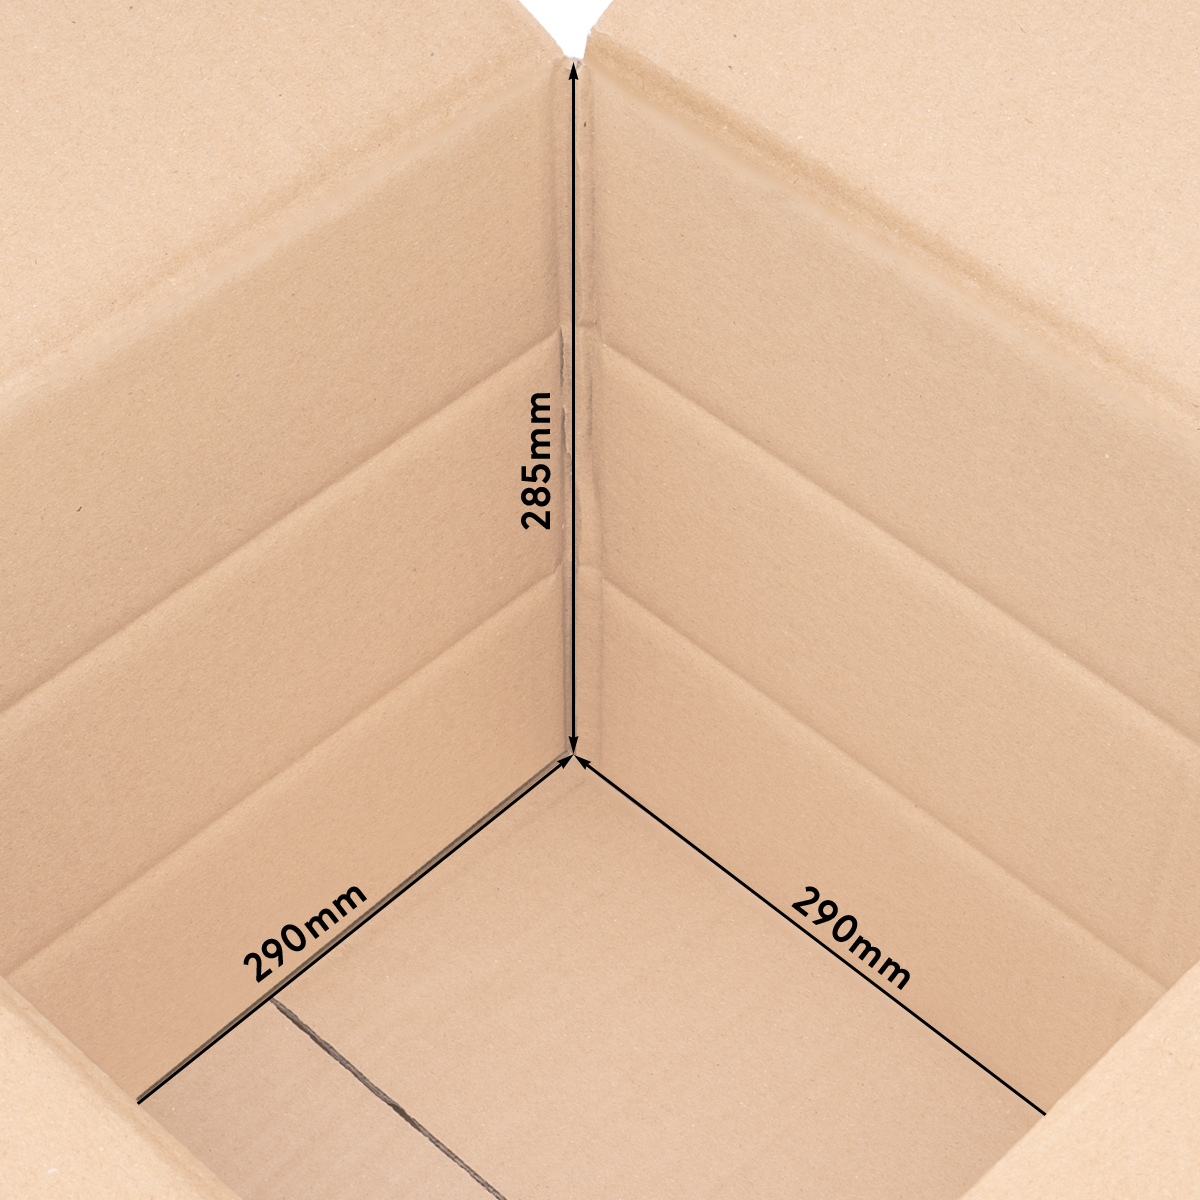 Cardboard box, double wall, 300x300x300 mm - KK 41